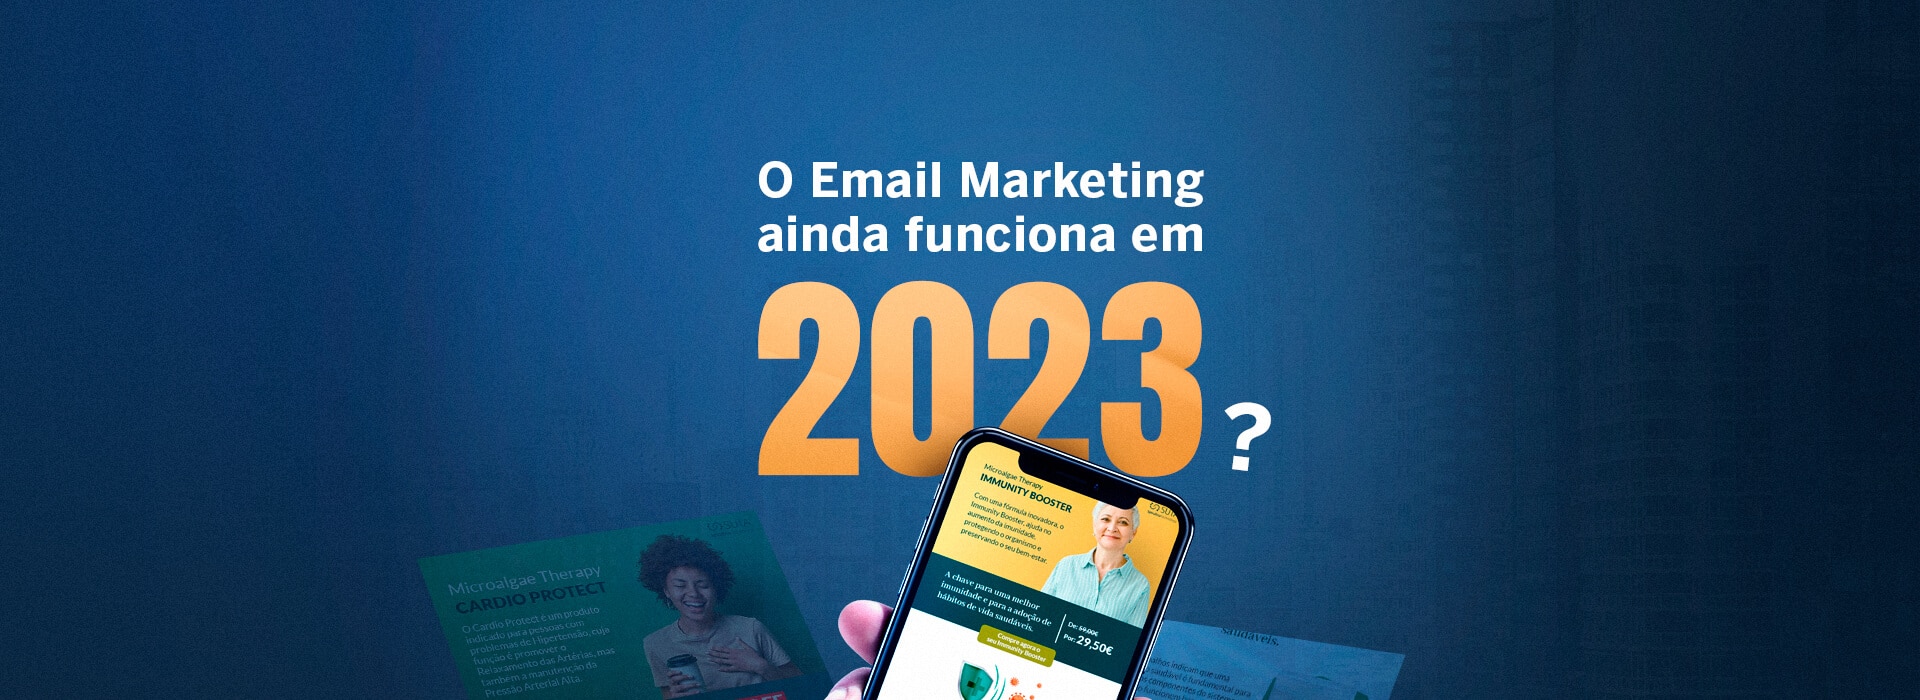 O Email Marketing ainda funciona em 2023? - beSeen Digital Marketing